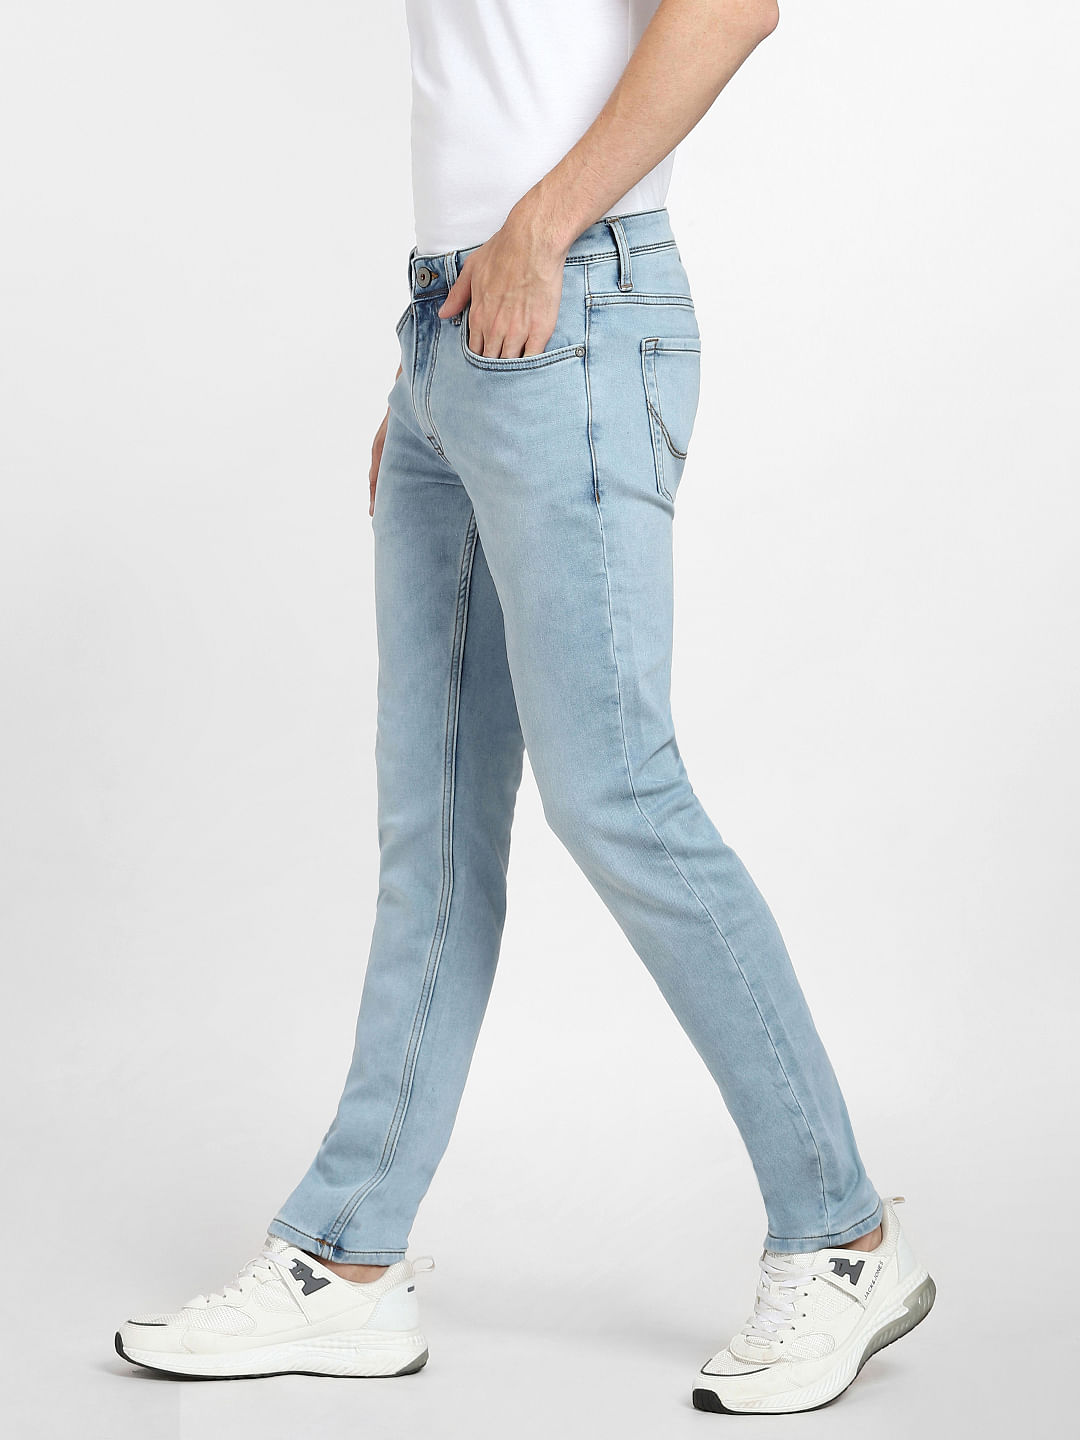 Buy Crocodile Men Blue Jean Slim Fit Stretchable Jeans